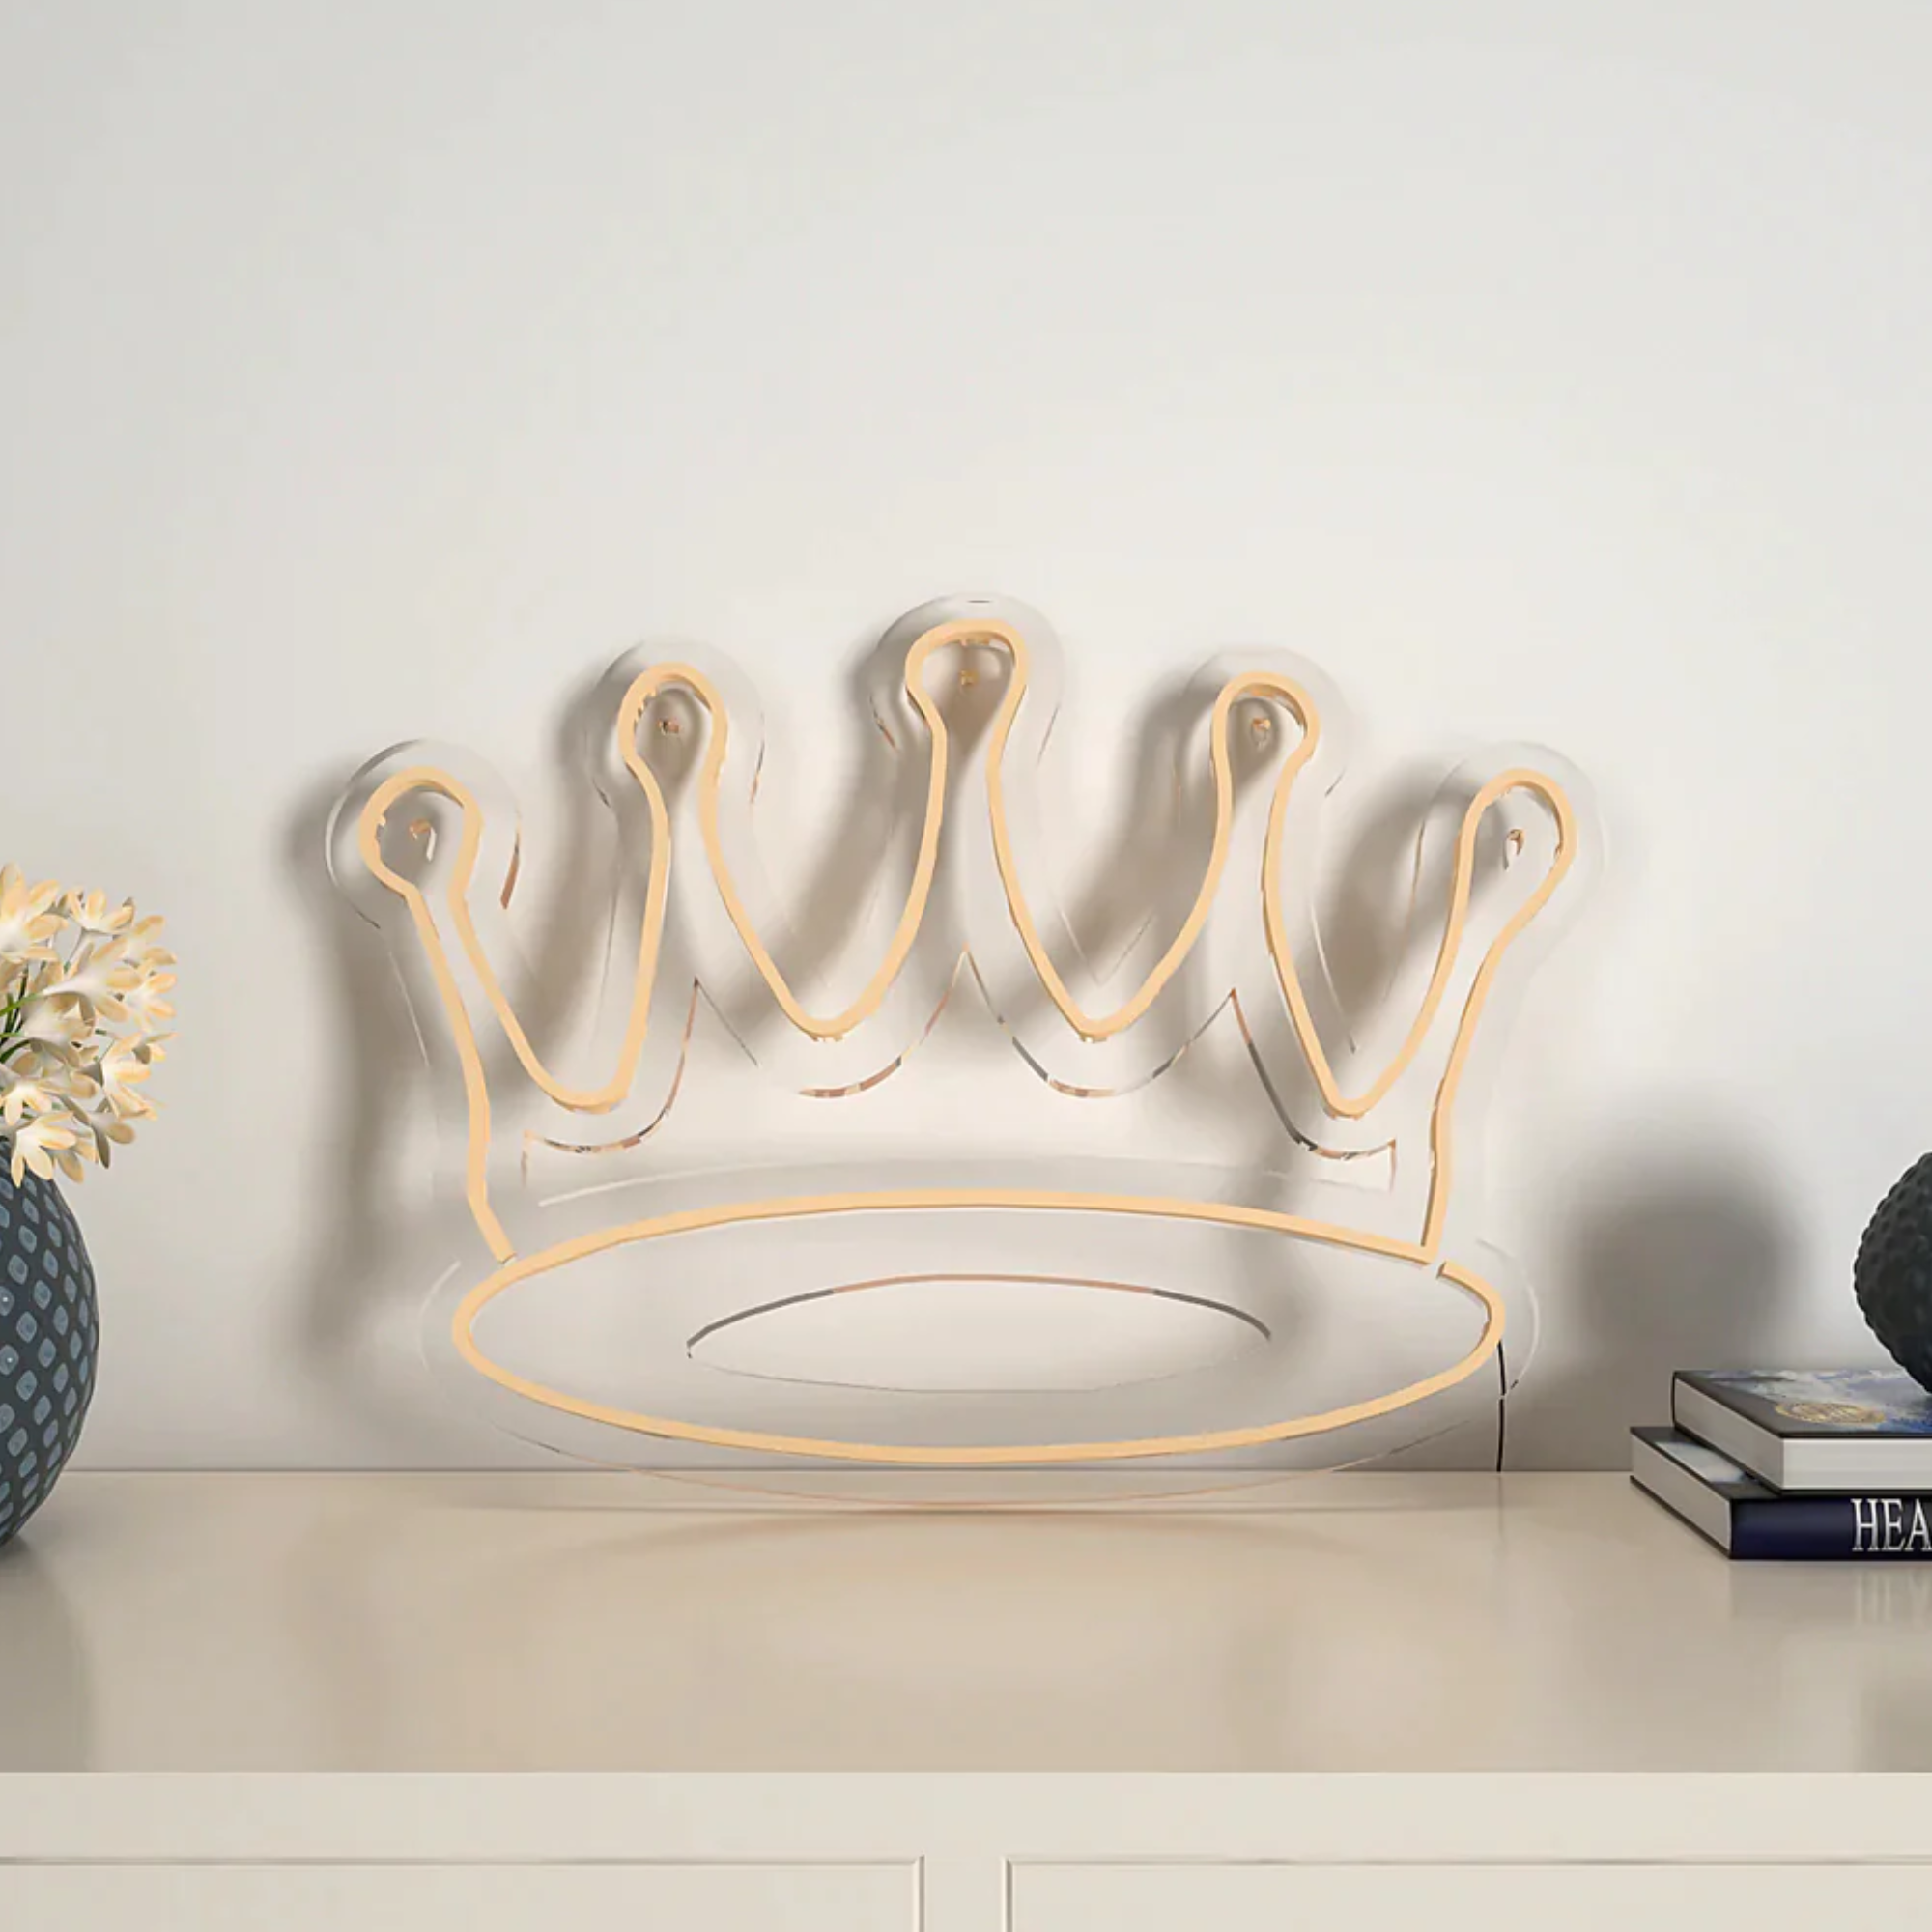 Queen Crown Design Warm LED Neon Light